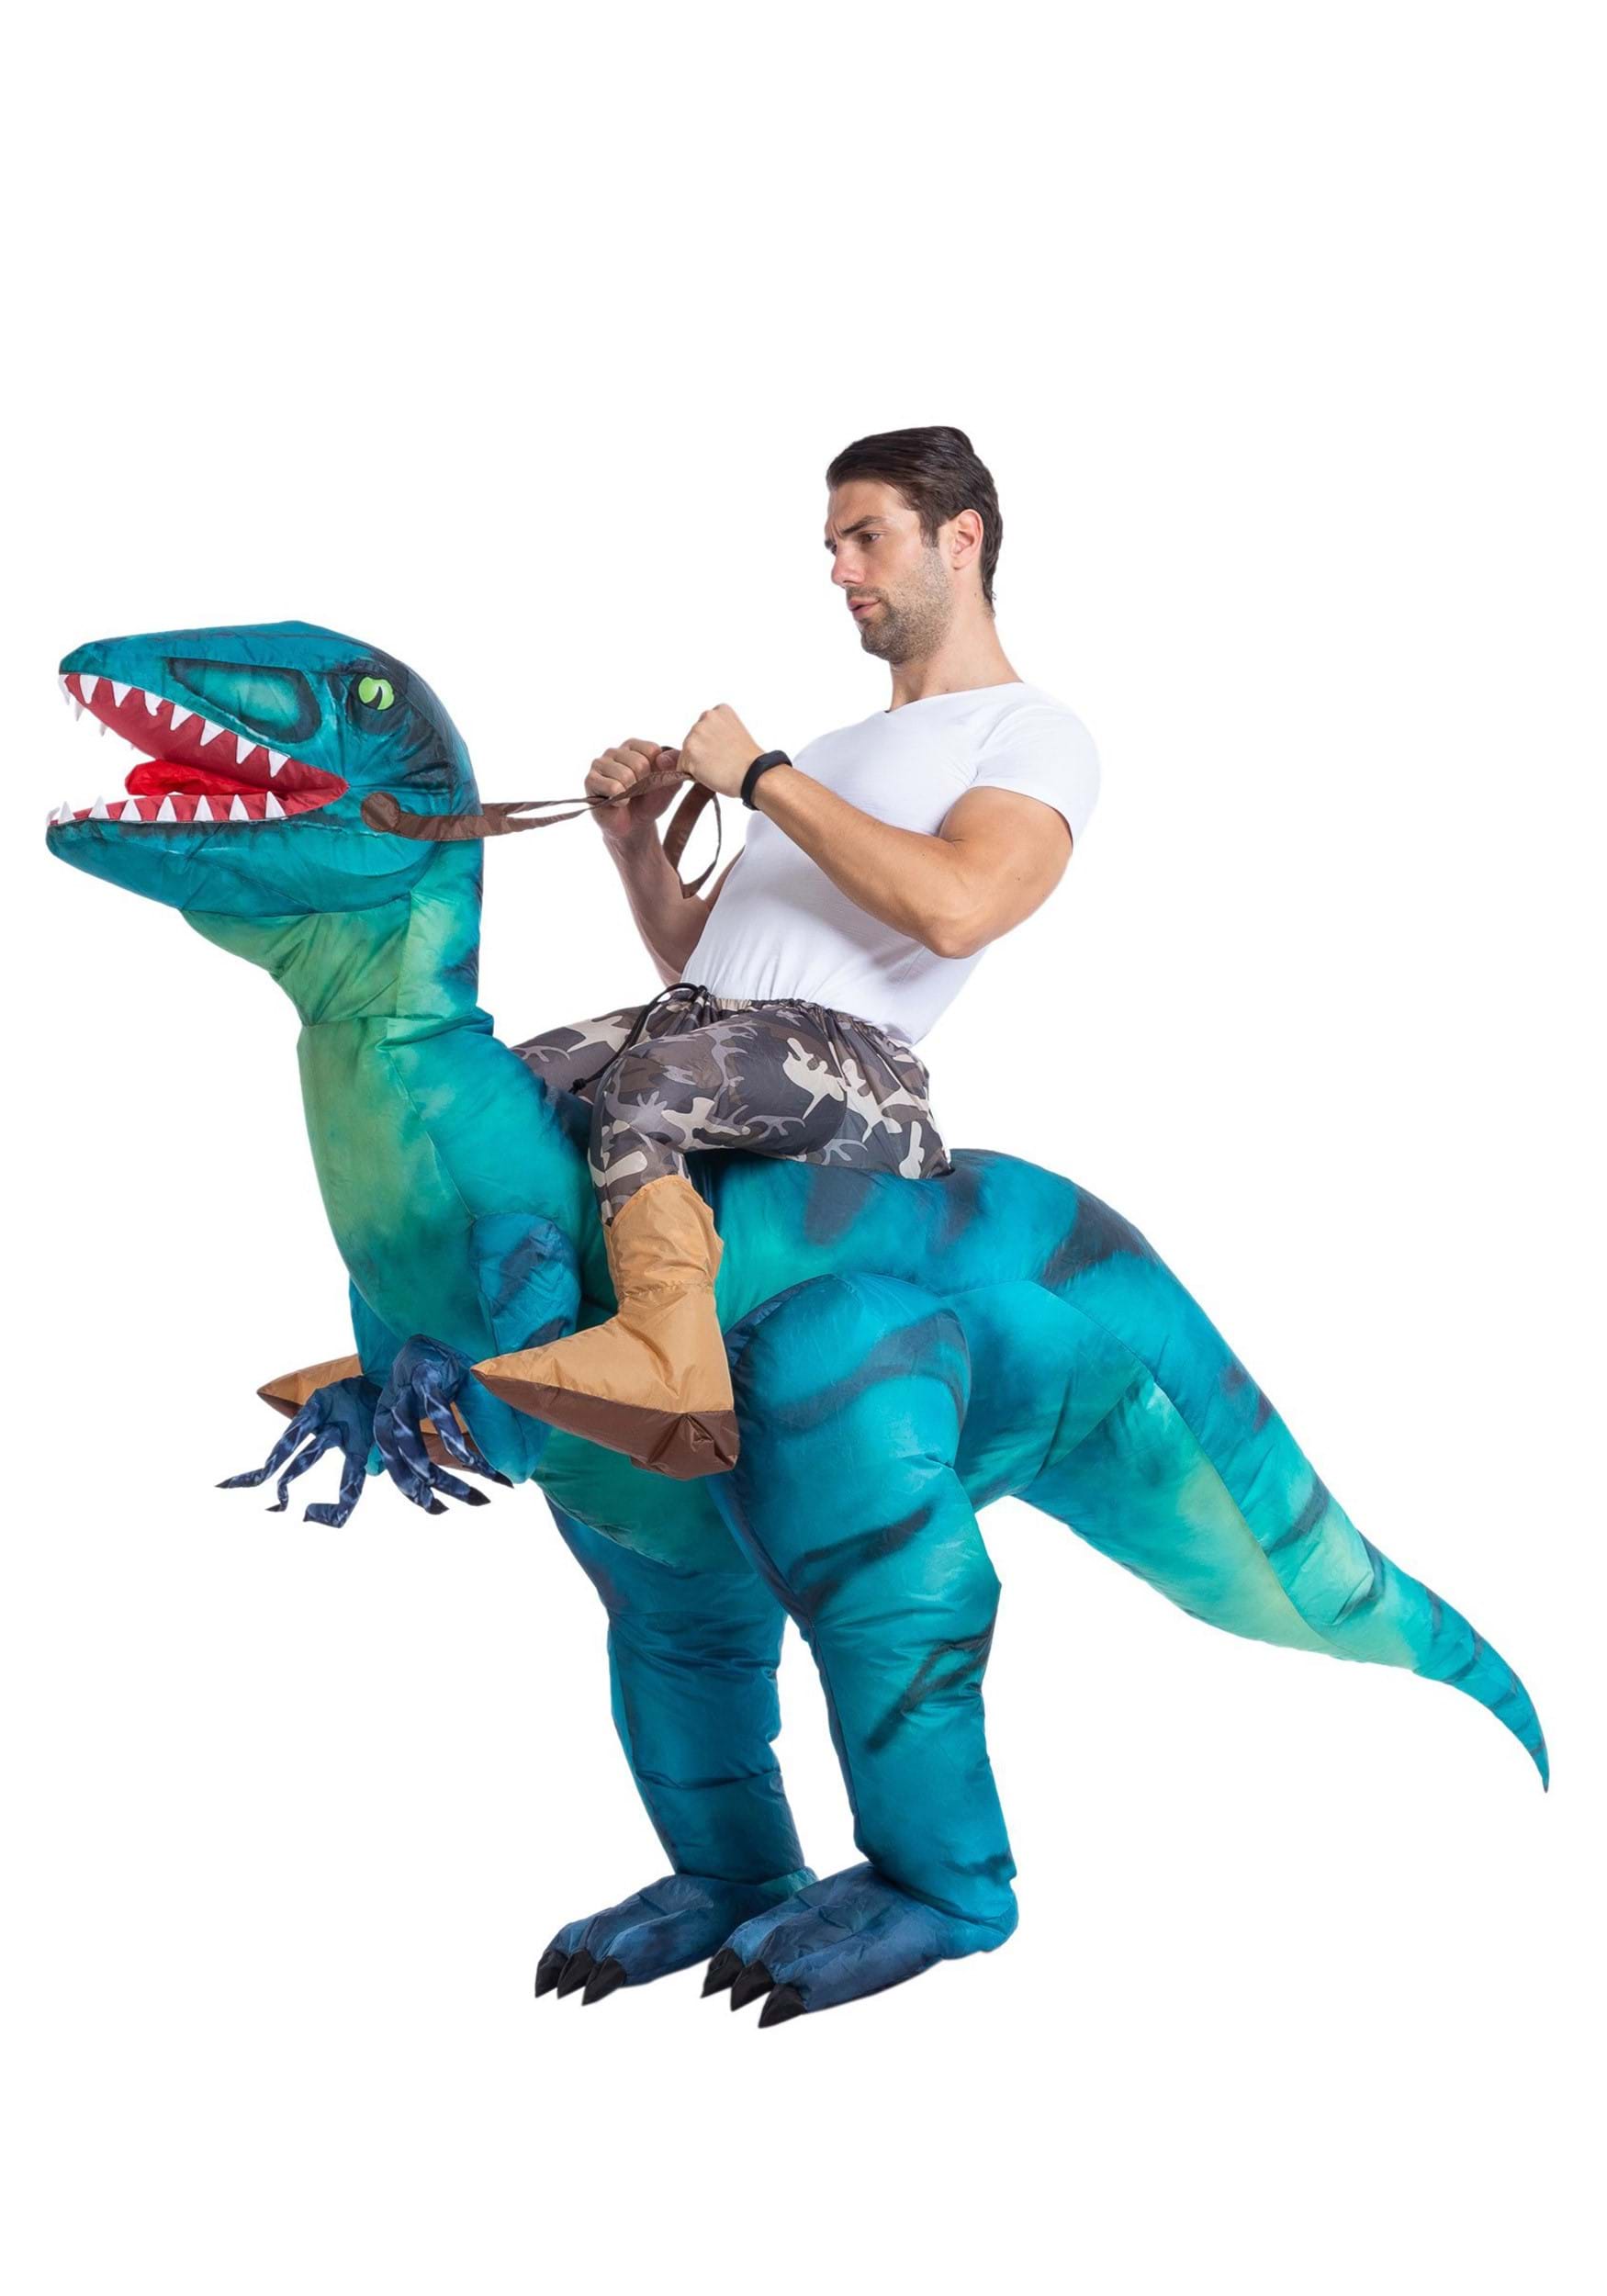 Inflatable Adult Raptor Ride-On Costume